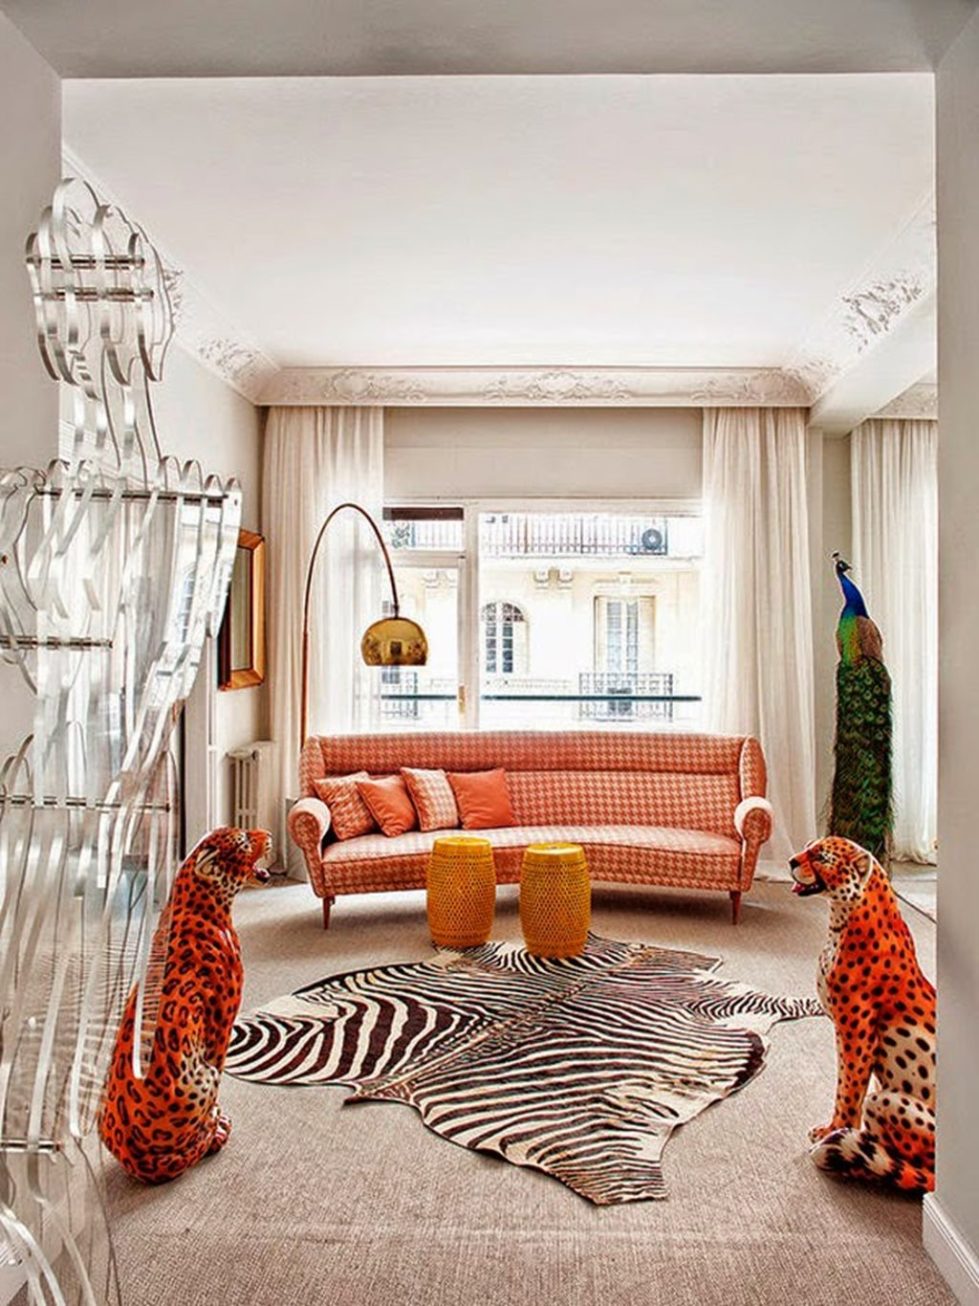 Fusion interior design - living room